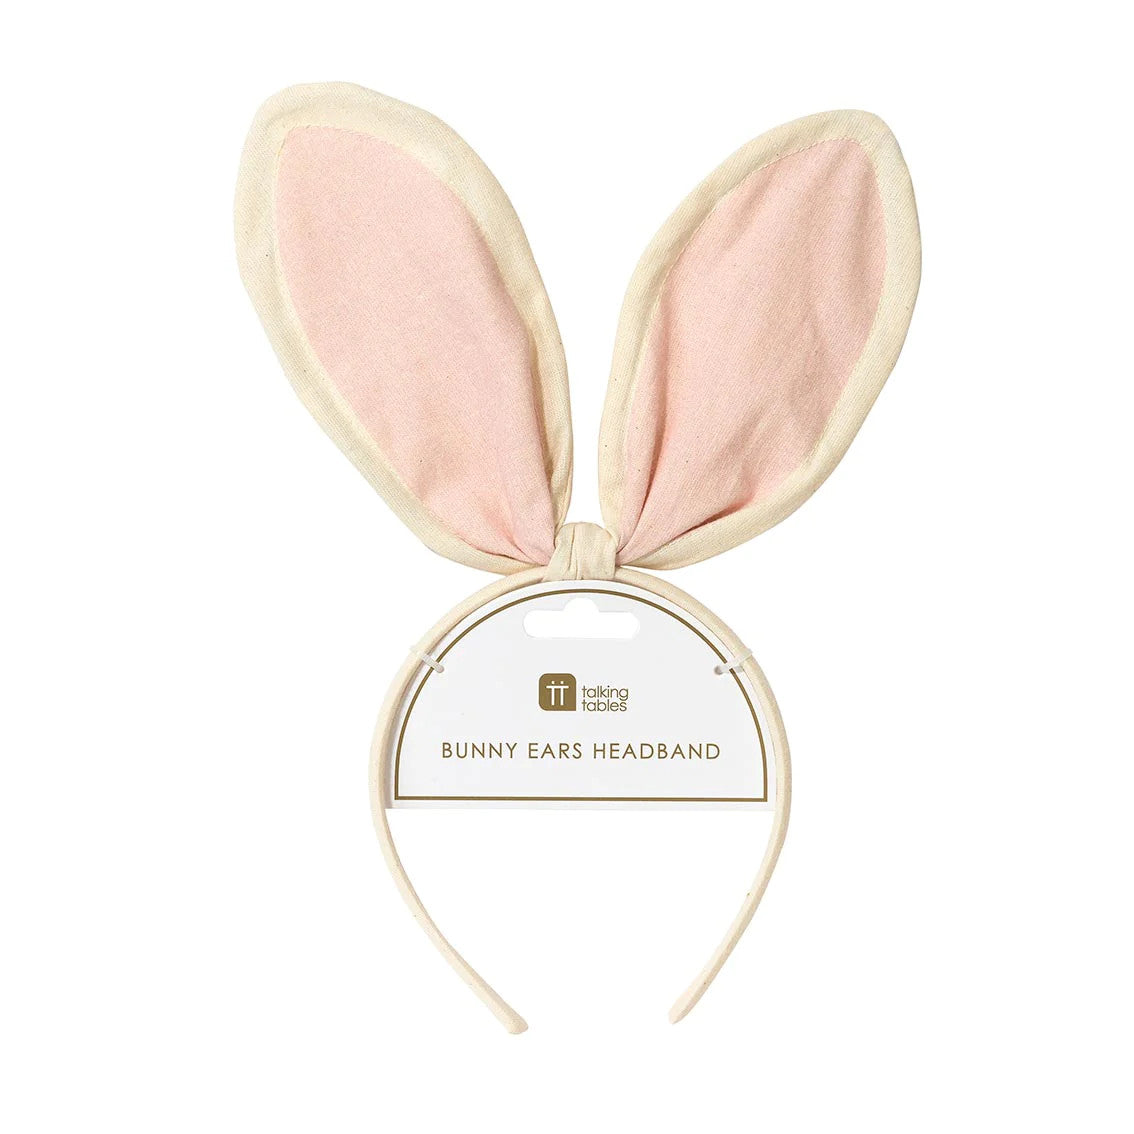 Spring Bunny Ears Headband by Talking Tables.